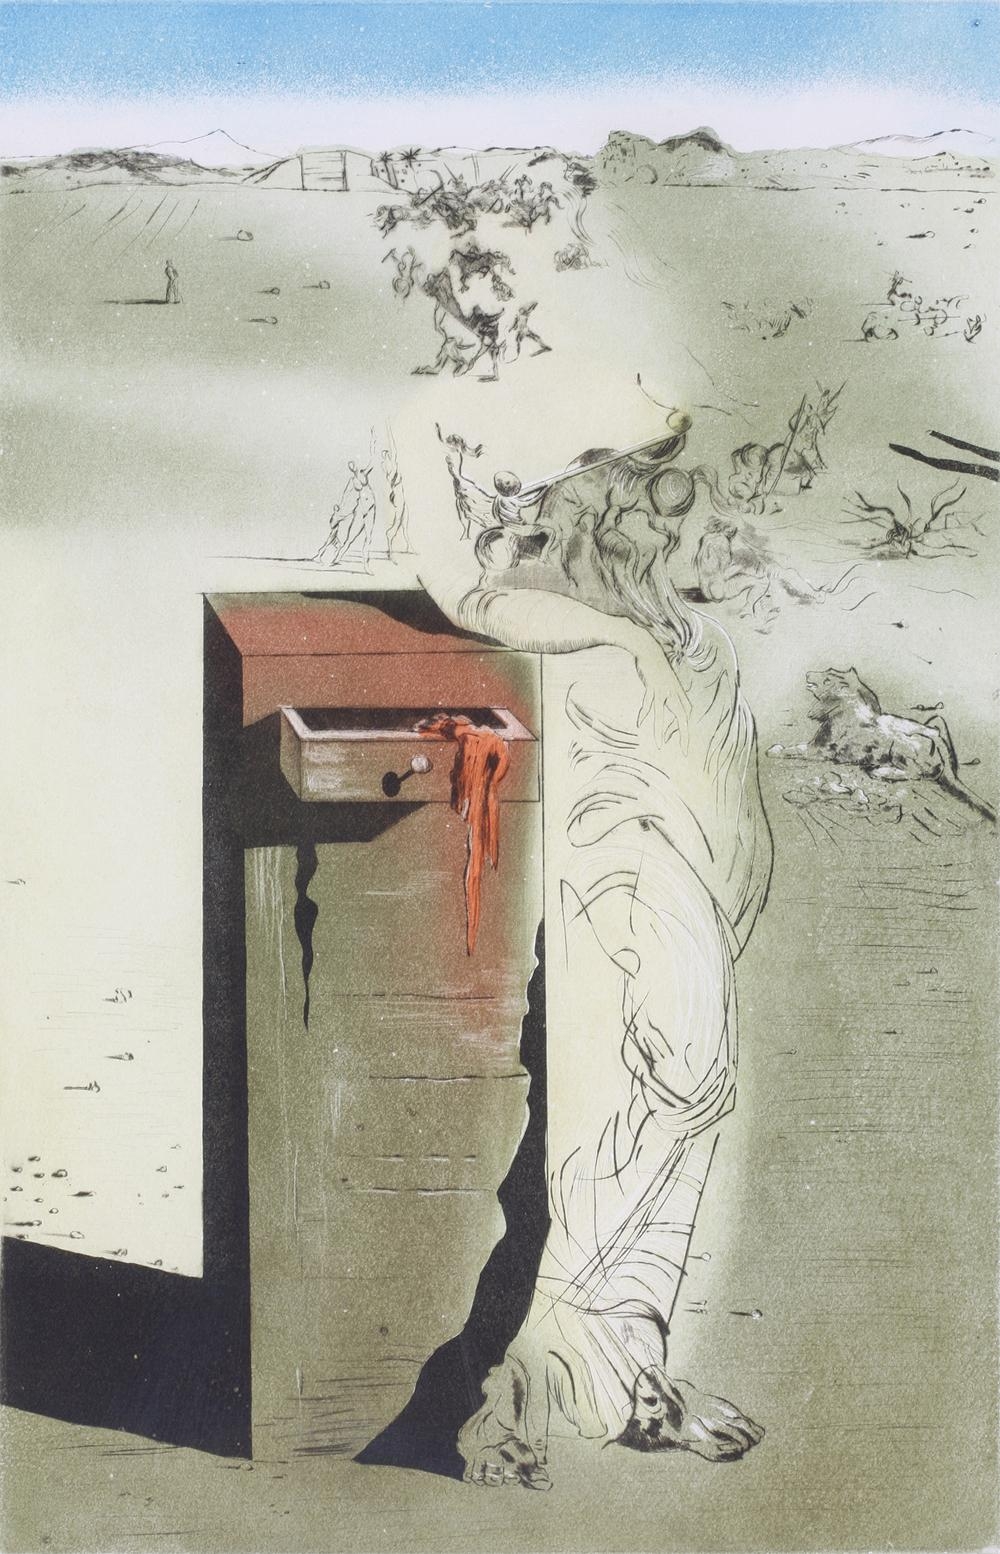 TIROIR SURREALISTE by Salvador Dalí